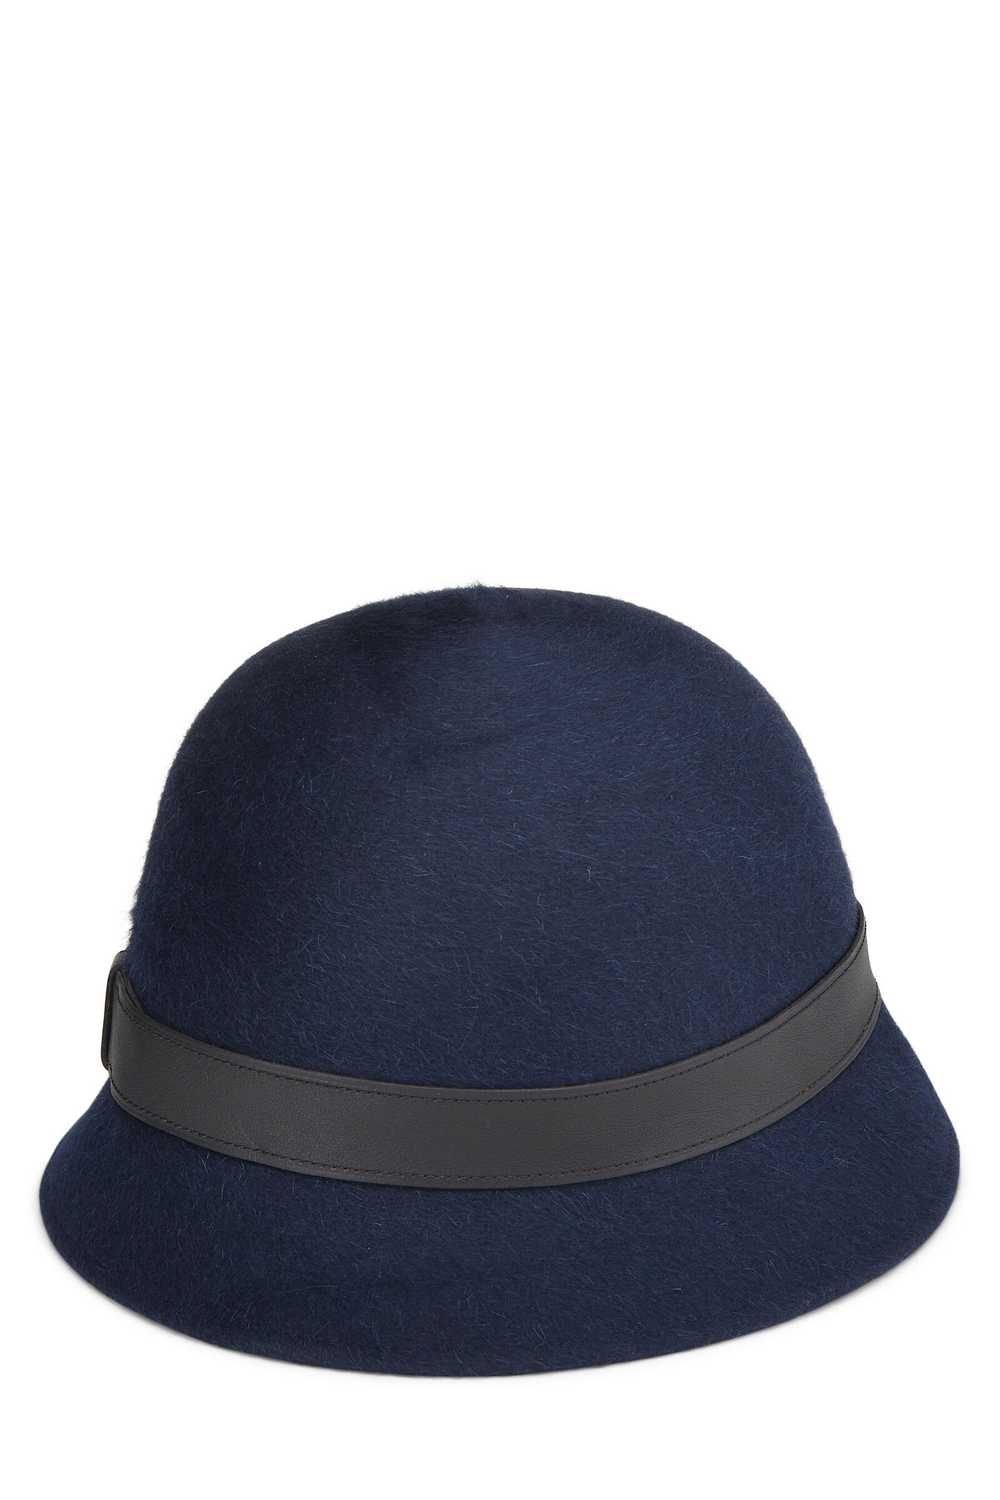 Navy Felt Cloche Hat - image 2